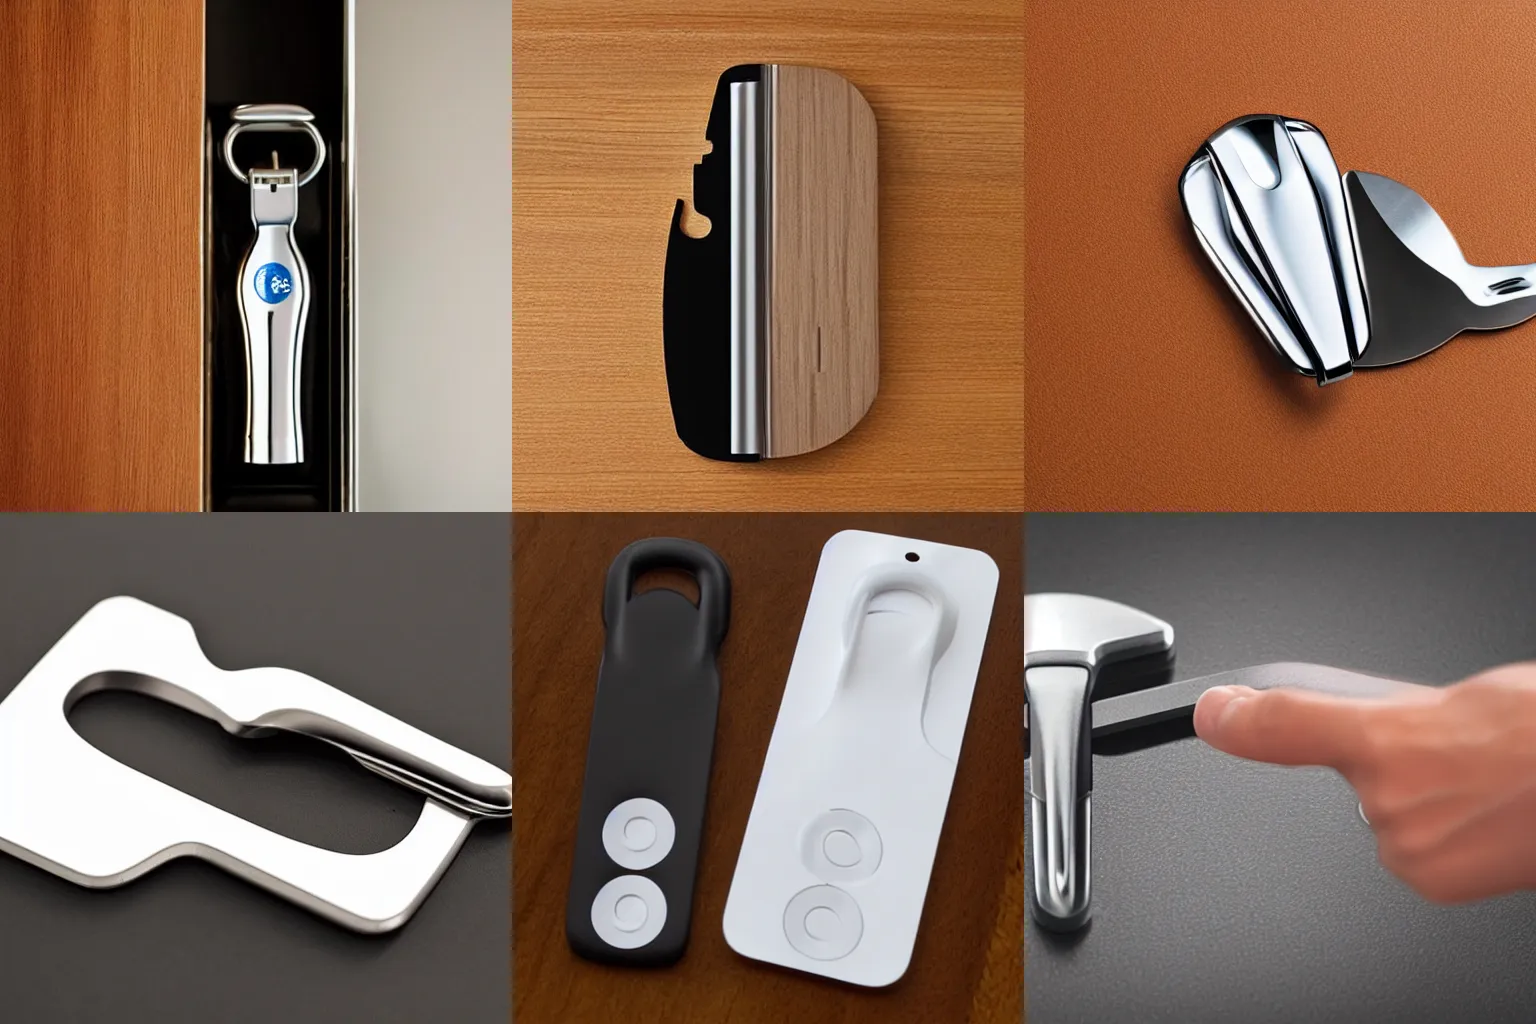 Prompt: bottle opener as designed by Apple